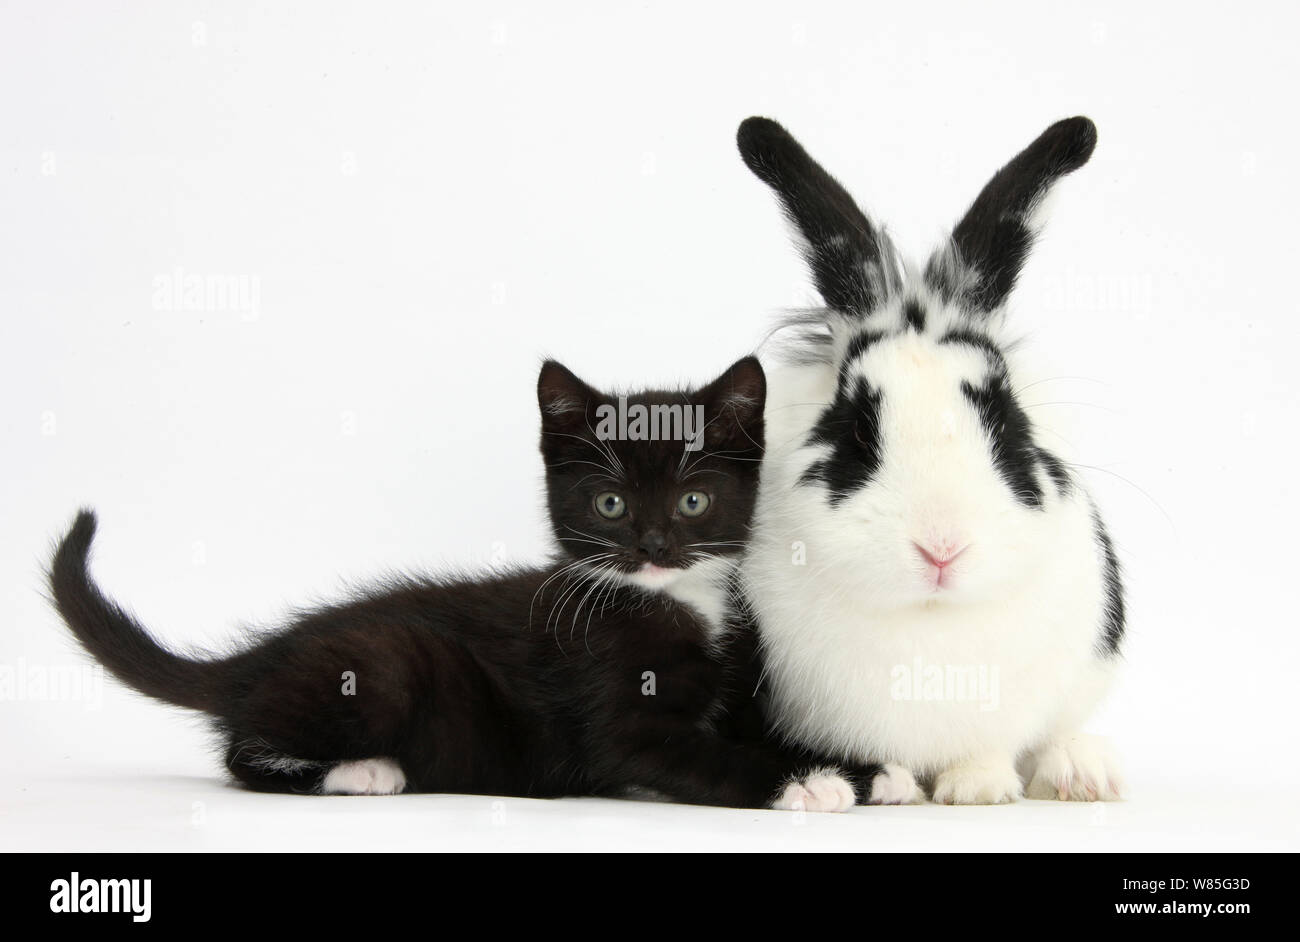 Black and white tuxedo kitten with black and white rabbit. Stock Photo